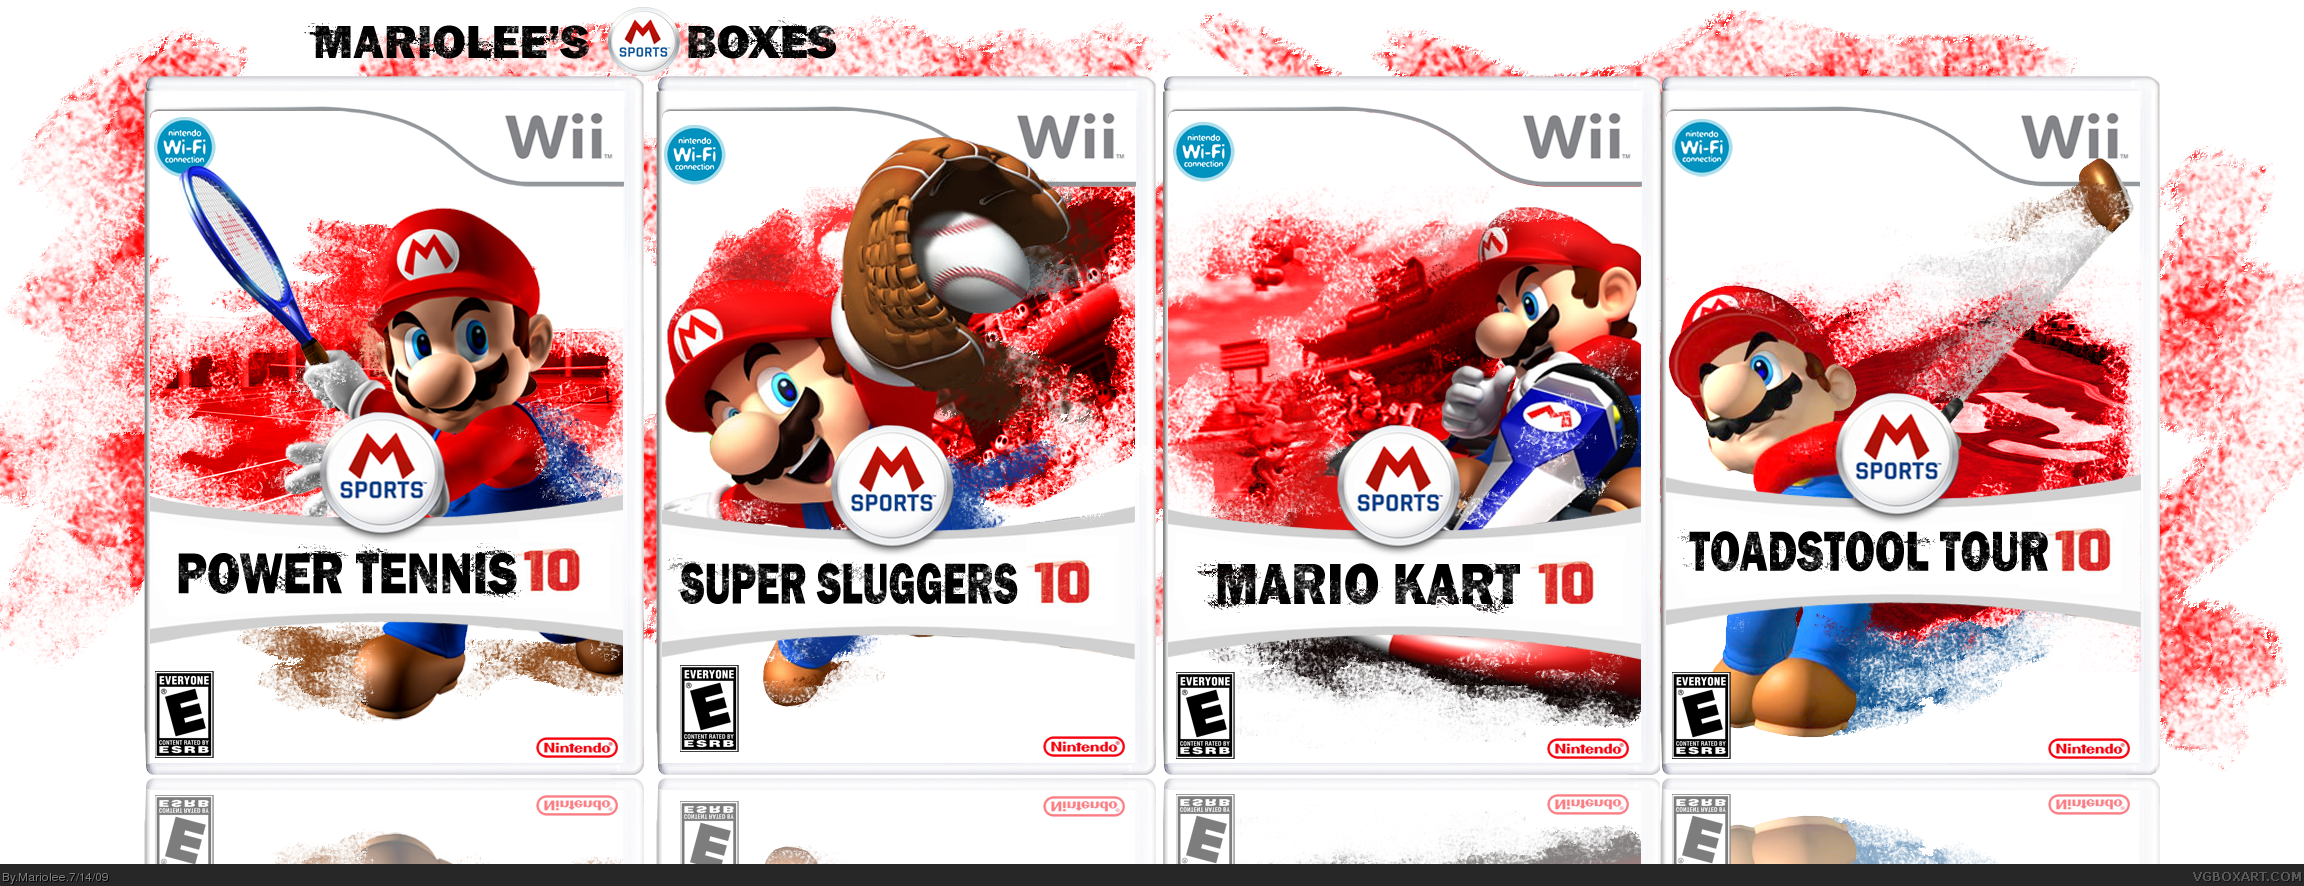 Mario Sports Collection box cover